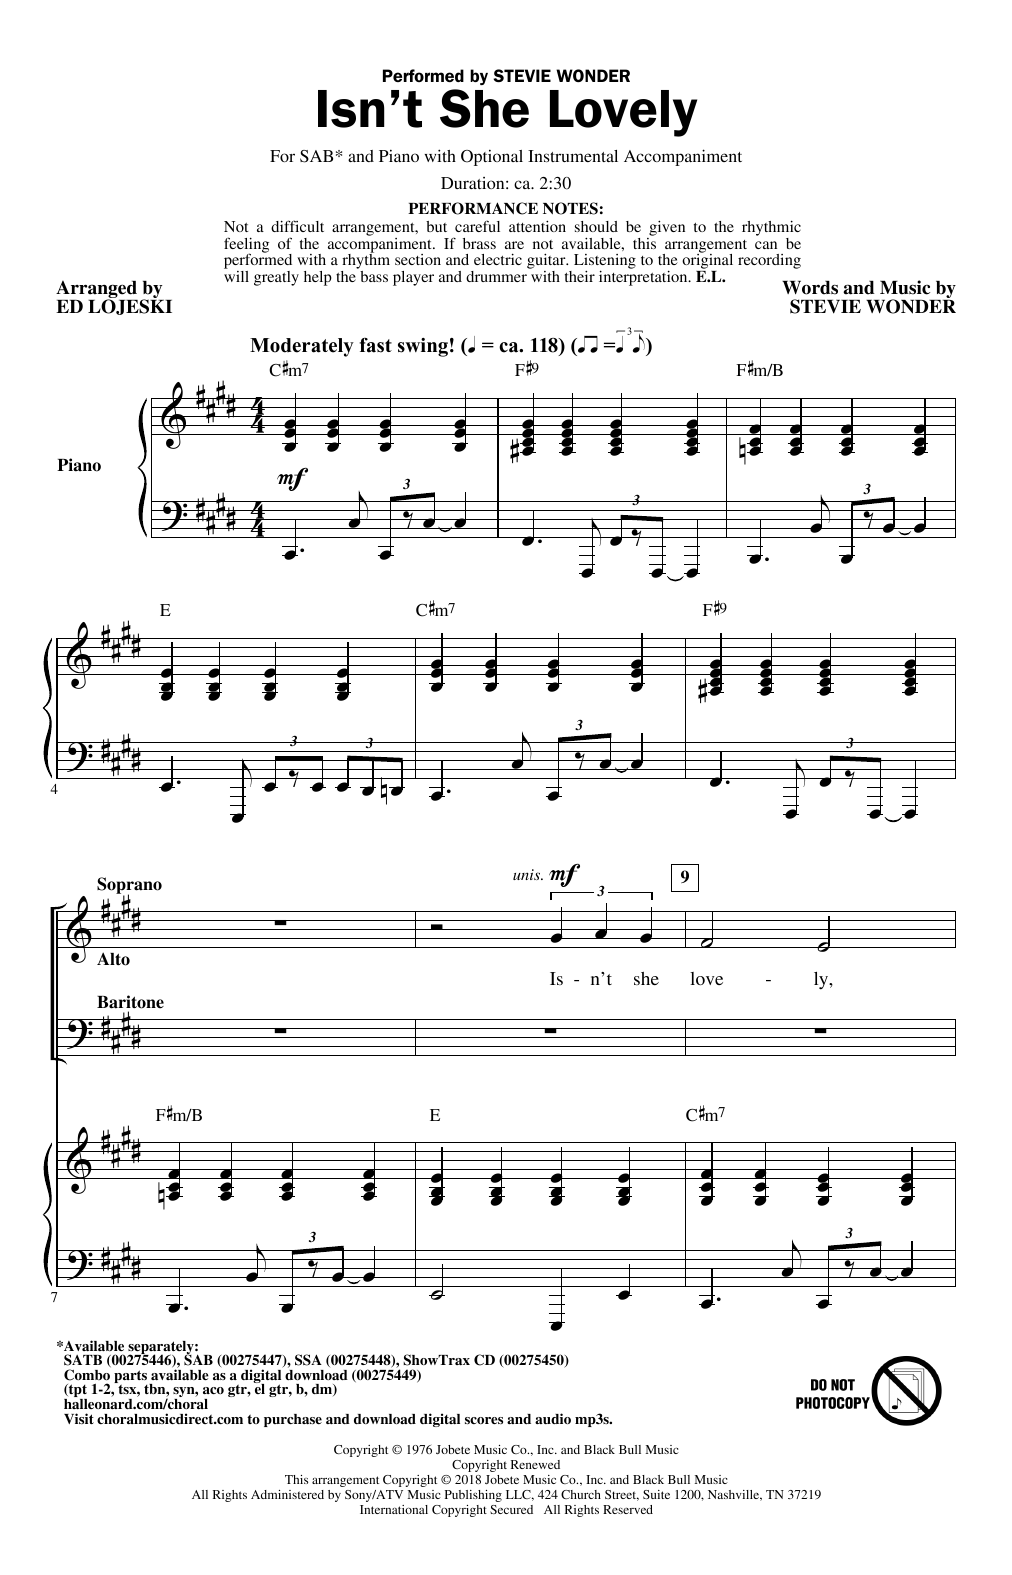 Stevie Wonder Isn't She Lovely (arr. Ed Lojeski) sheet music notes and chords arranged for SATB Choir